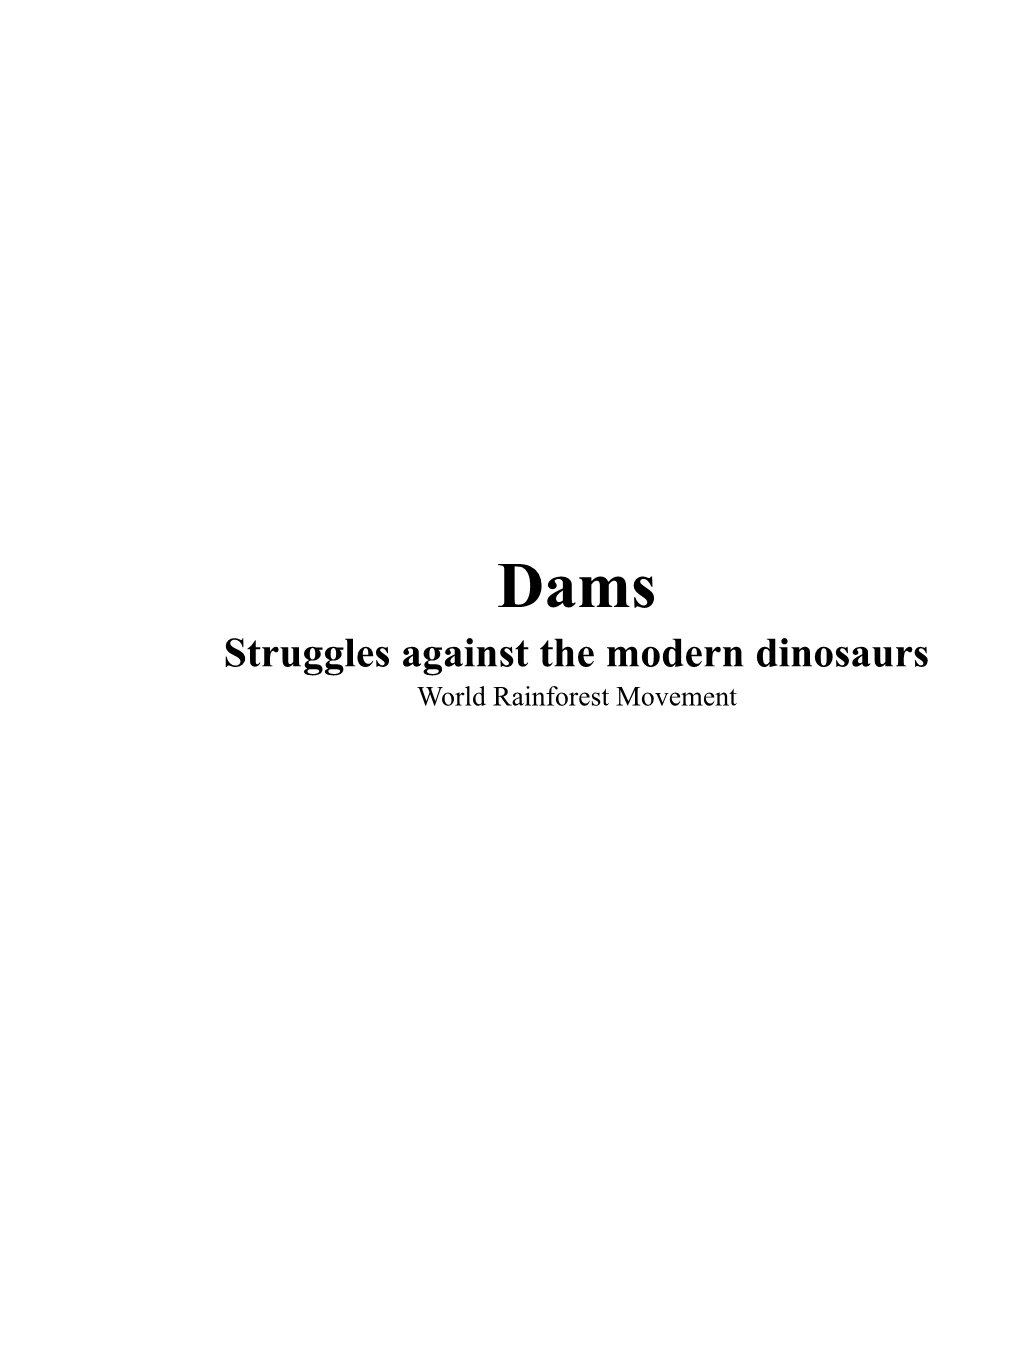 Dams: Struggles Against the Modern Dinosaurs 3